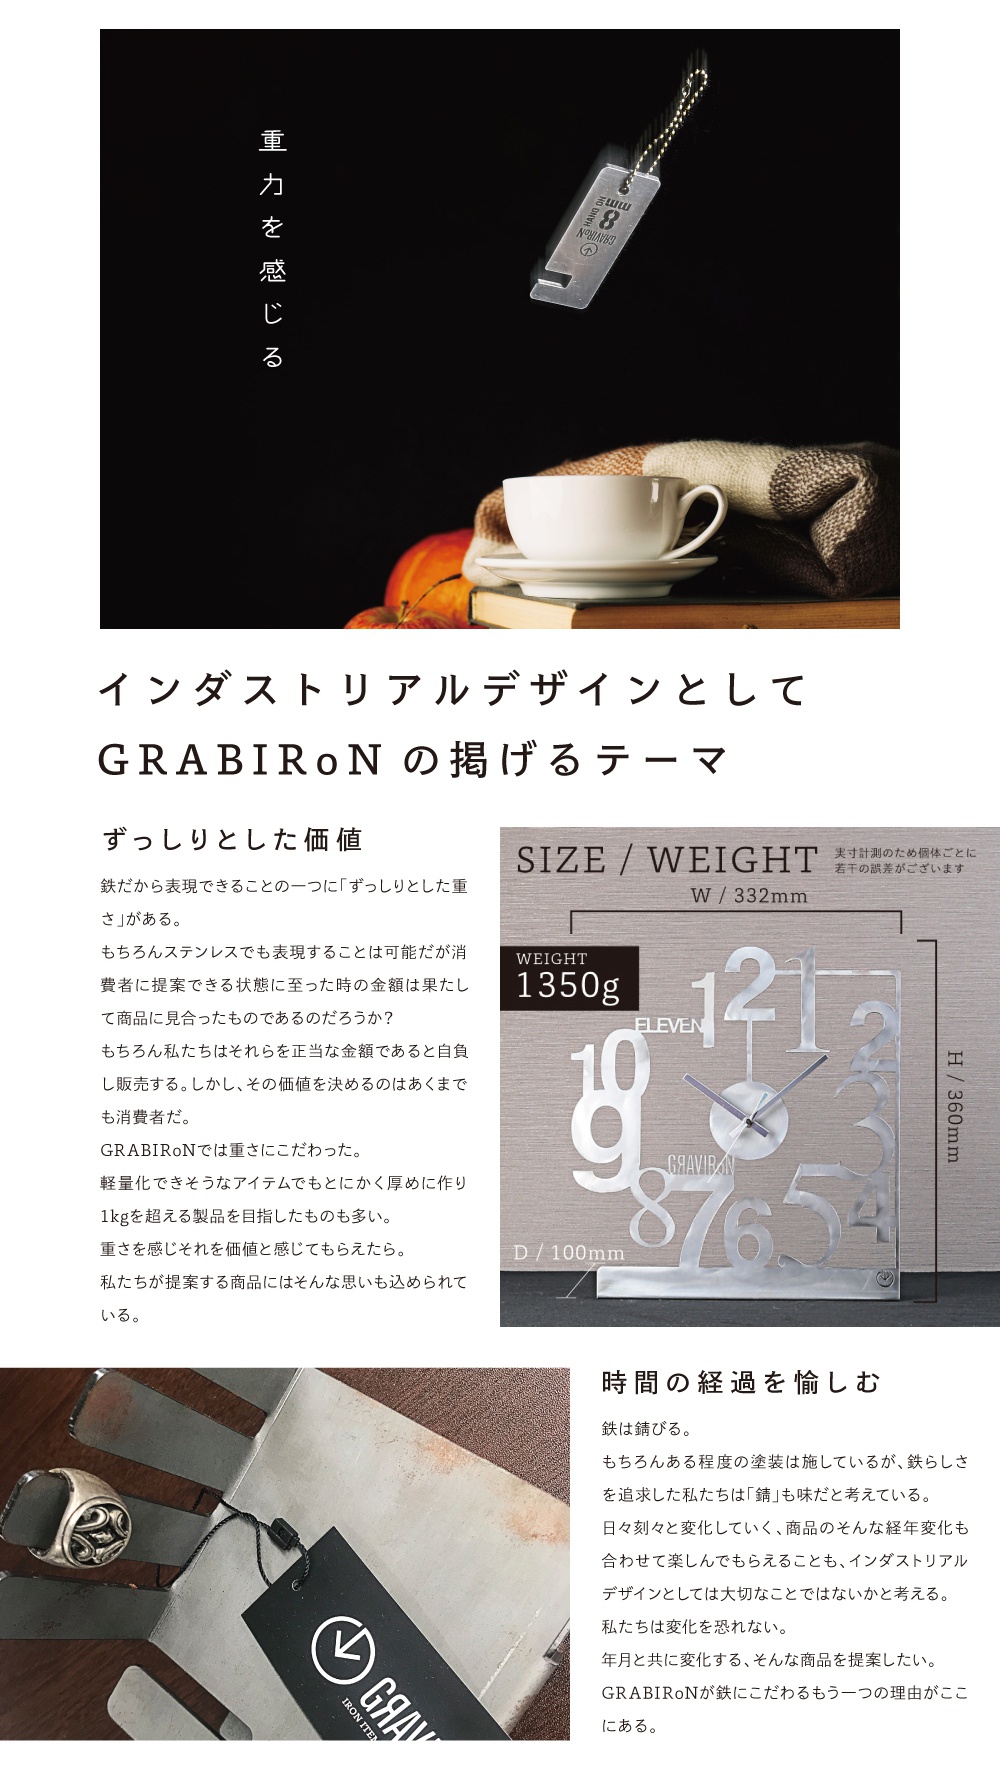 GRAVIRoN lid Box Tissue Case 酸洗鉄×黒皮鉄（ティッシュケース）